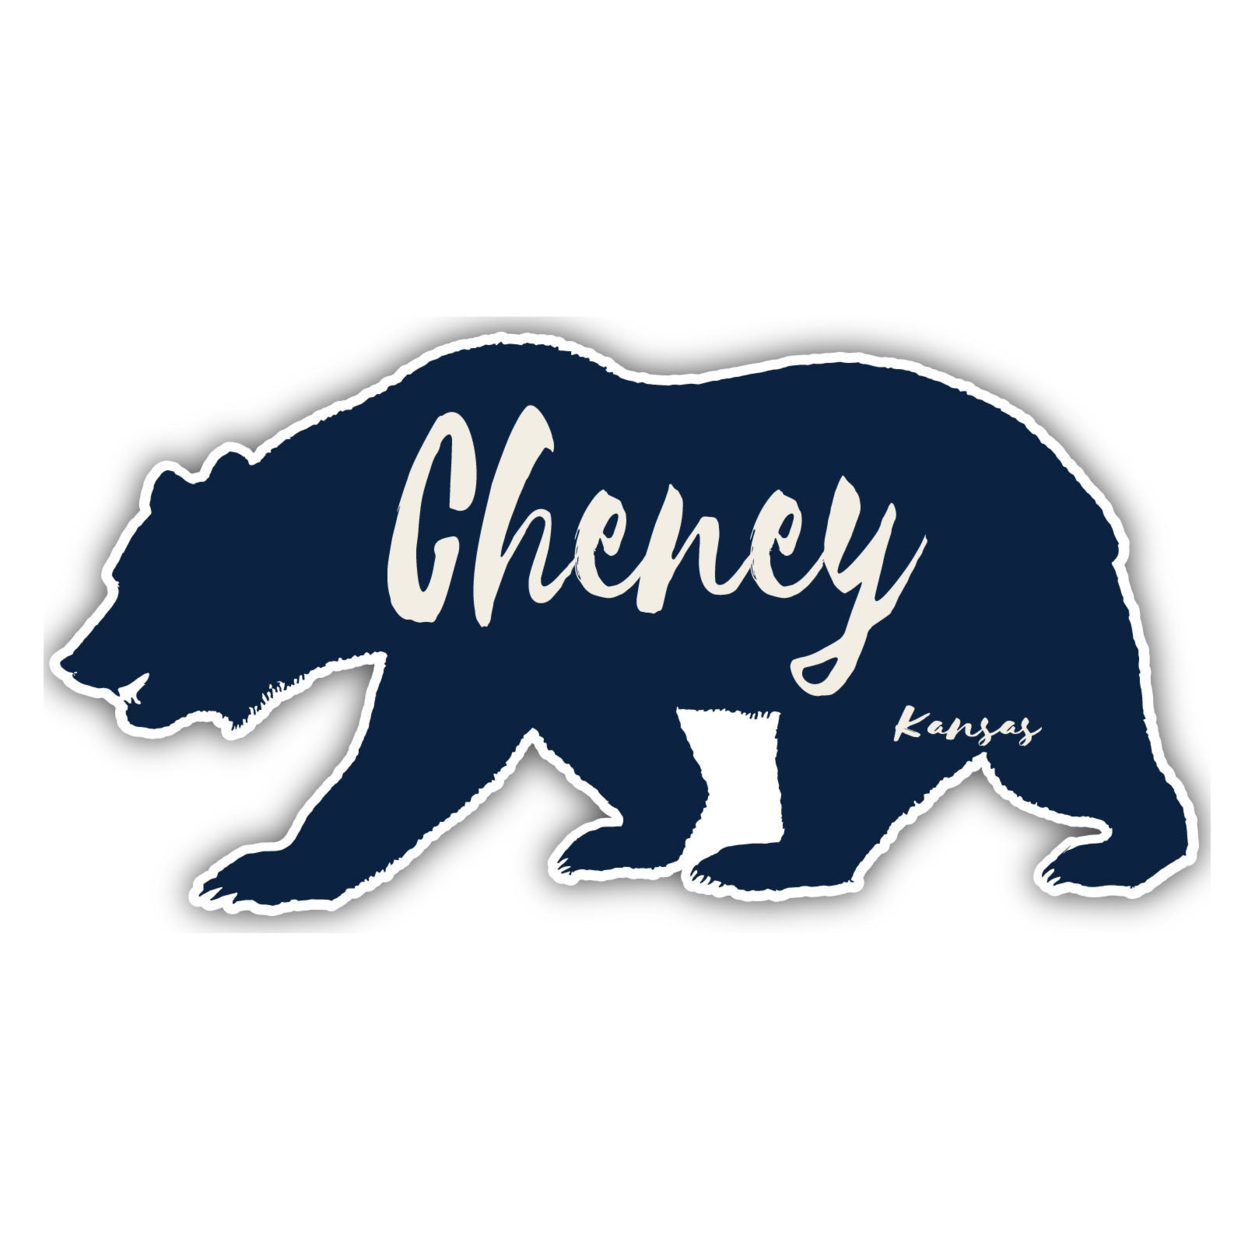 Cheney Kansas Souvenir Decorative Stickers (Choose Theme And Size) - 4-Pack, 10-Inch, Bear